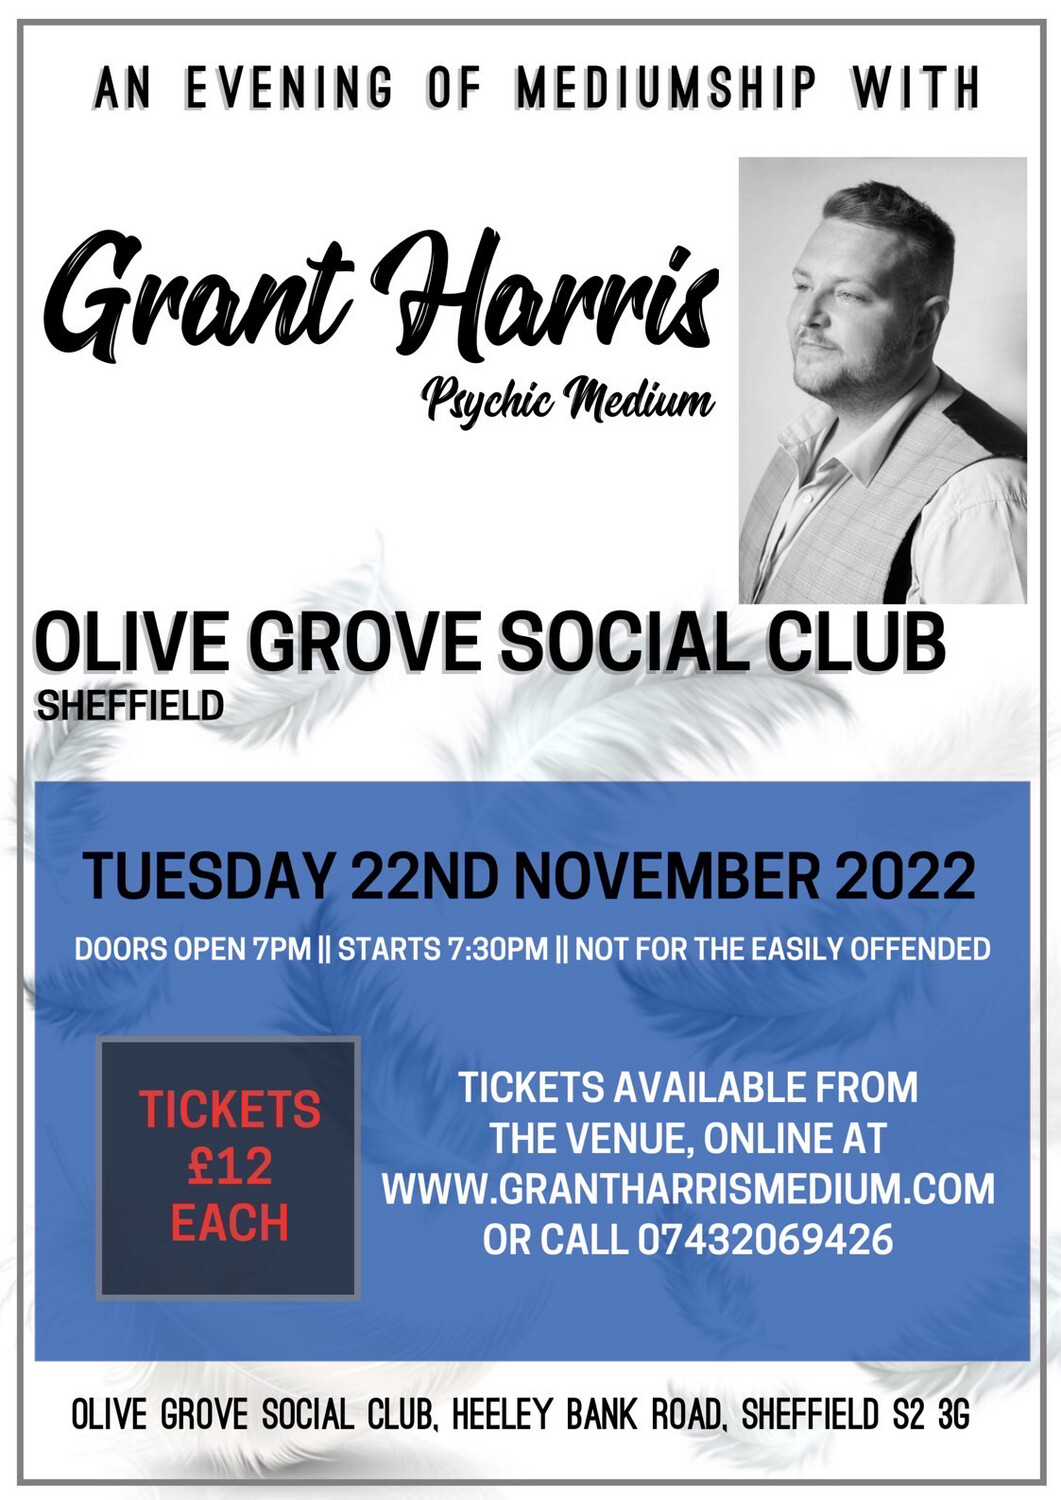 Olive Grove Social Club, Sheffield, Tues 22nd November 2022